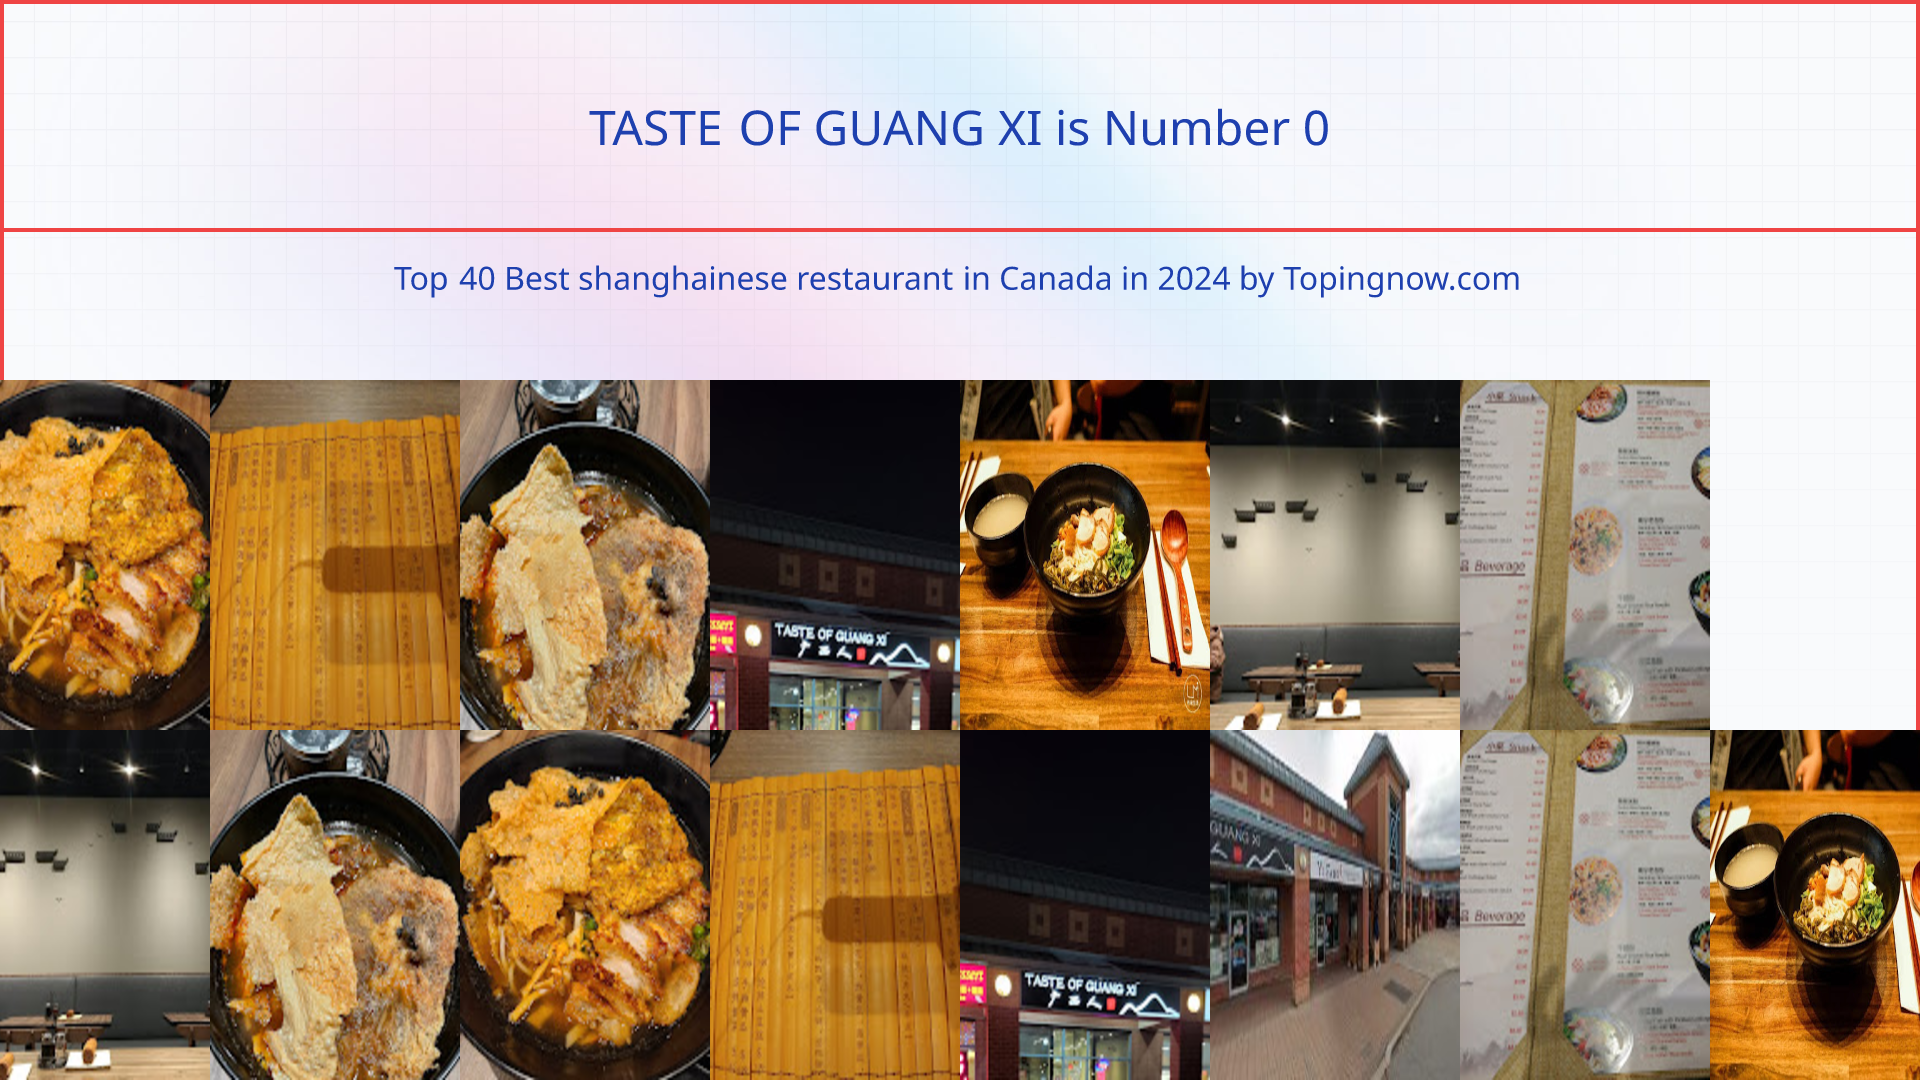 TASTE OF GUANG XI: Top 40 Best shanghainese restaurant in Canada in 2024